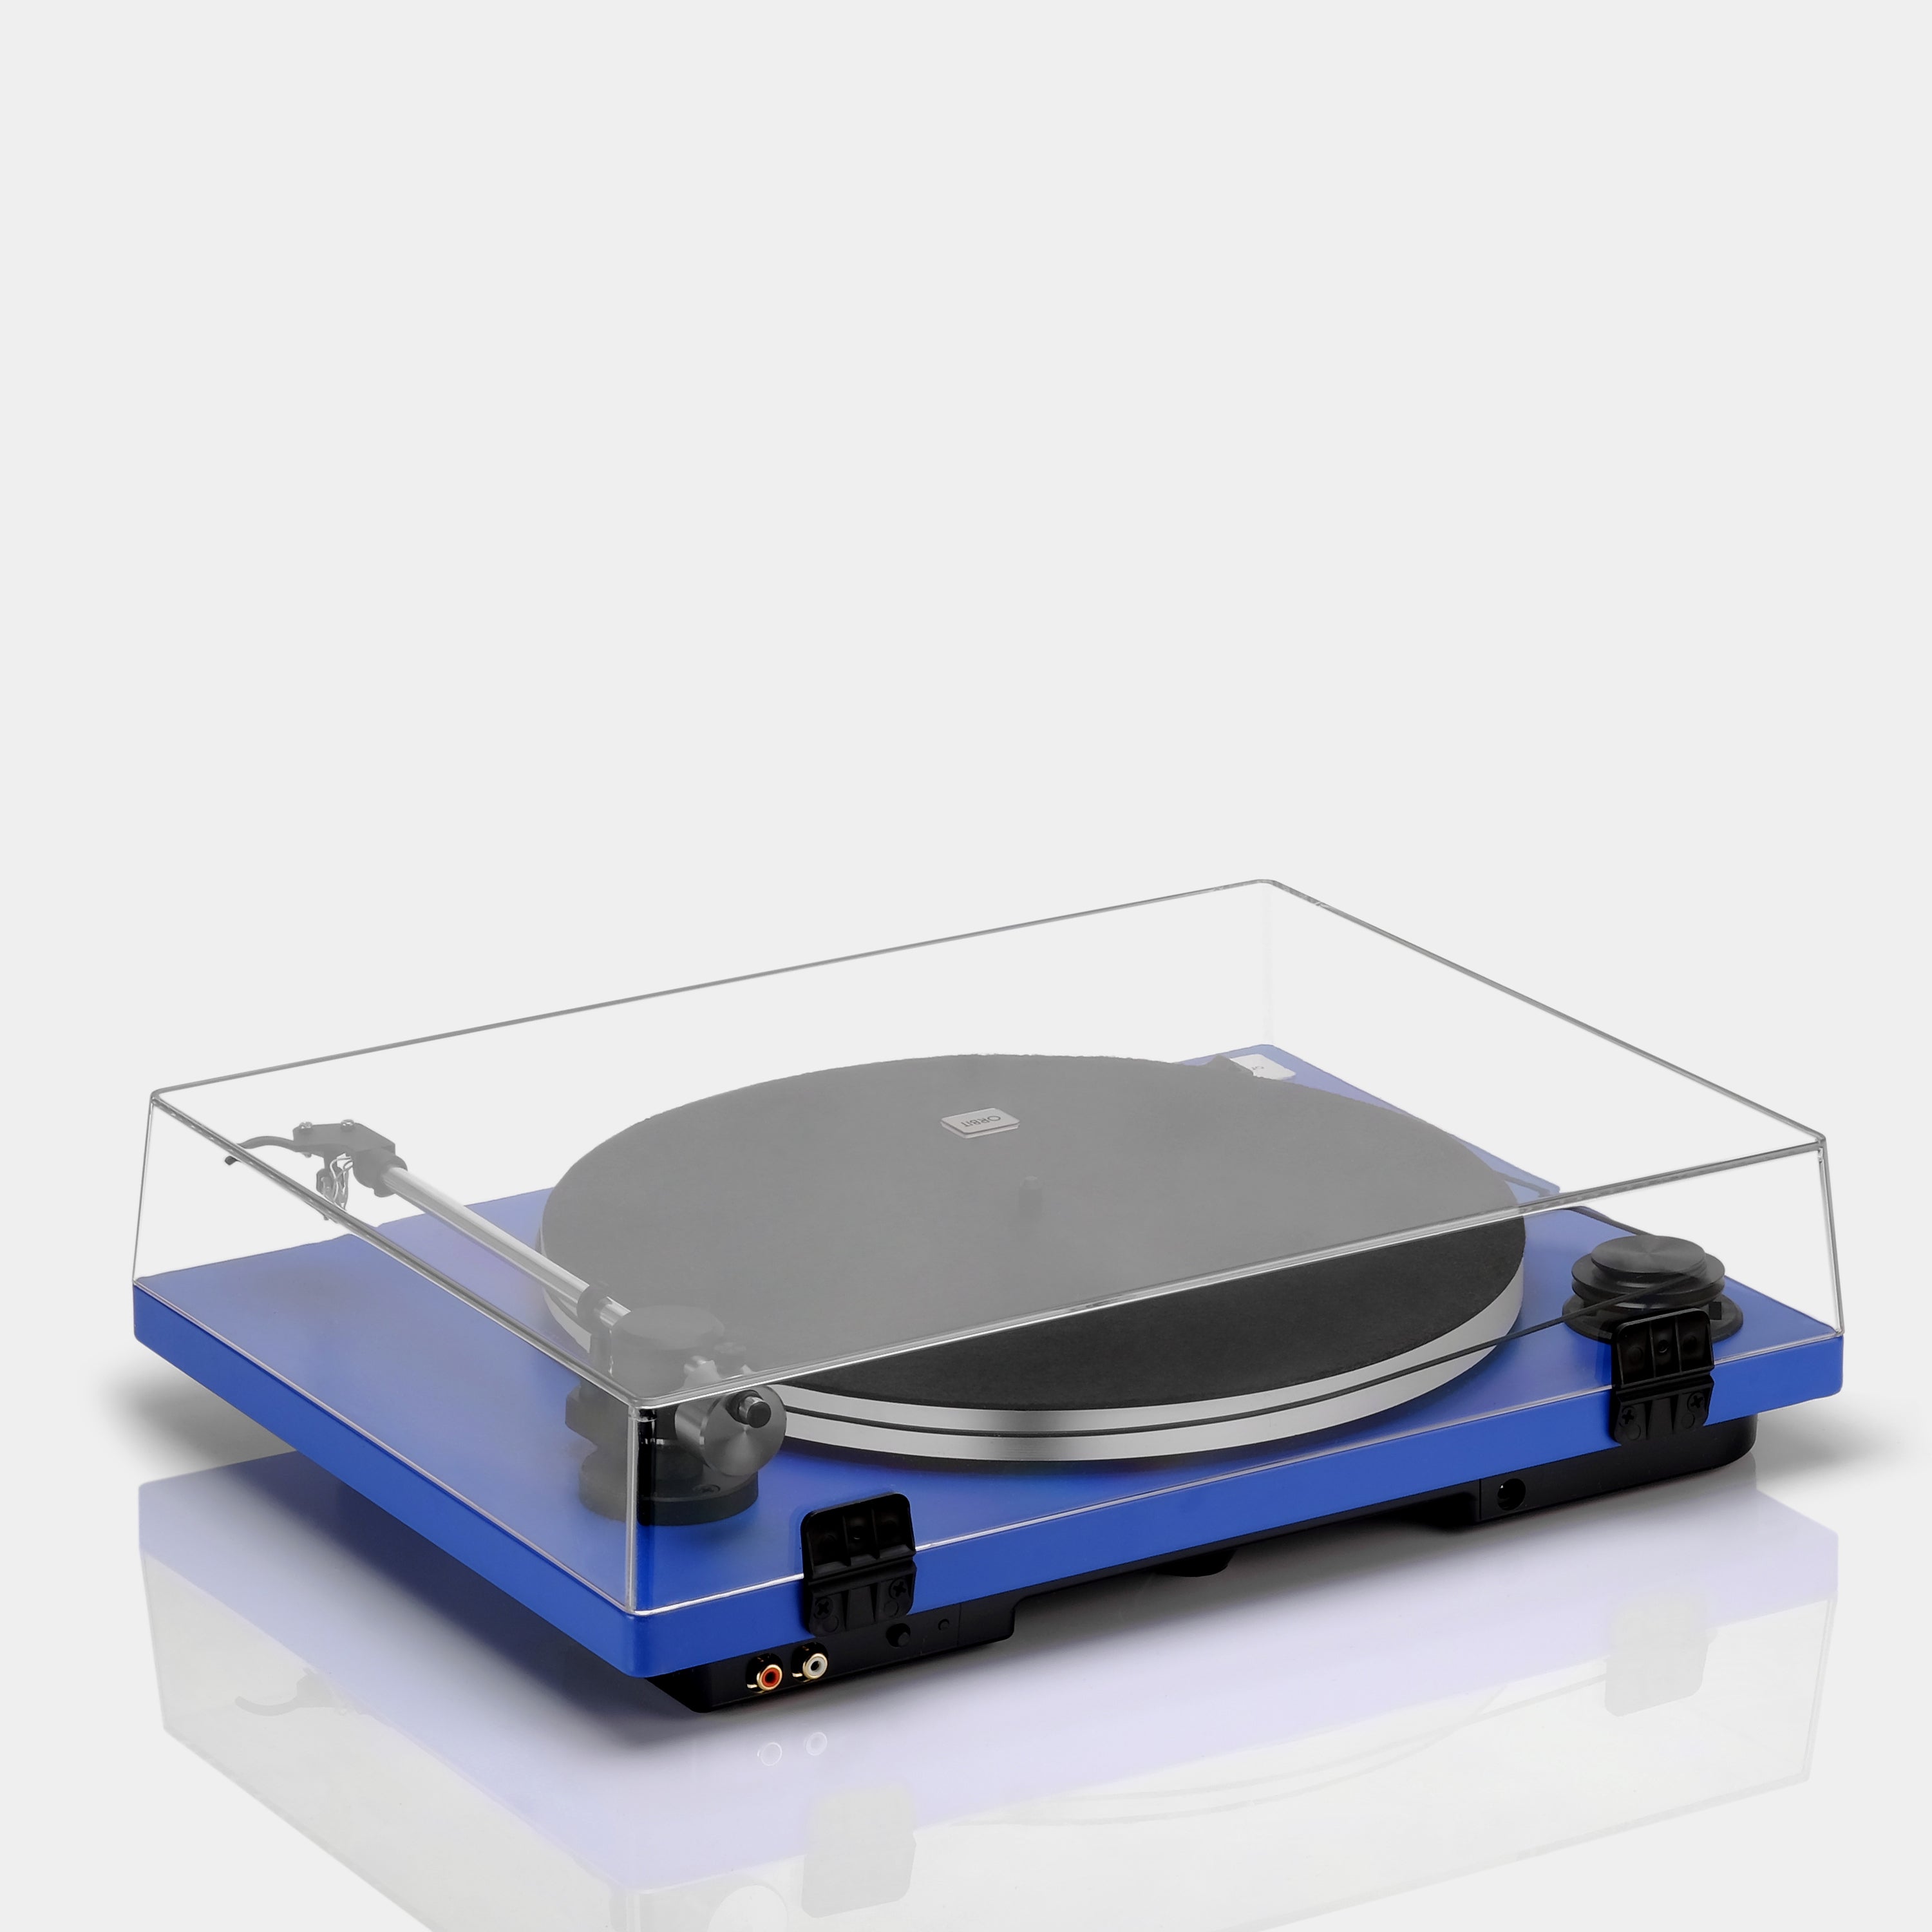 Orbit Plus Blue Turntable with Built-in Preamp by U-Turn Audio